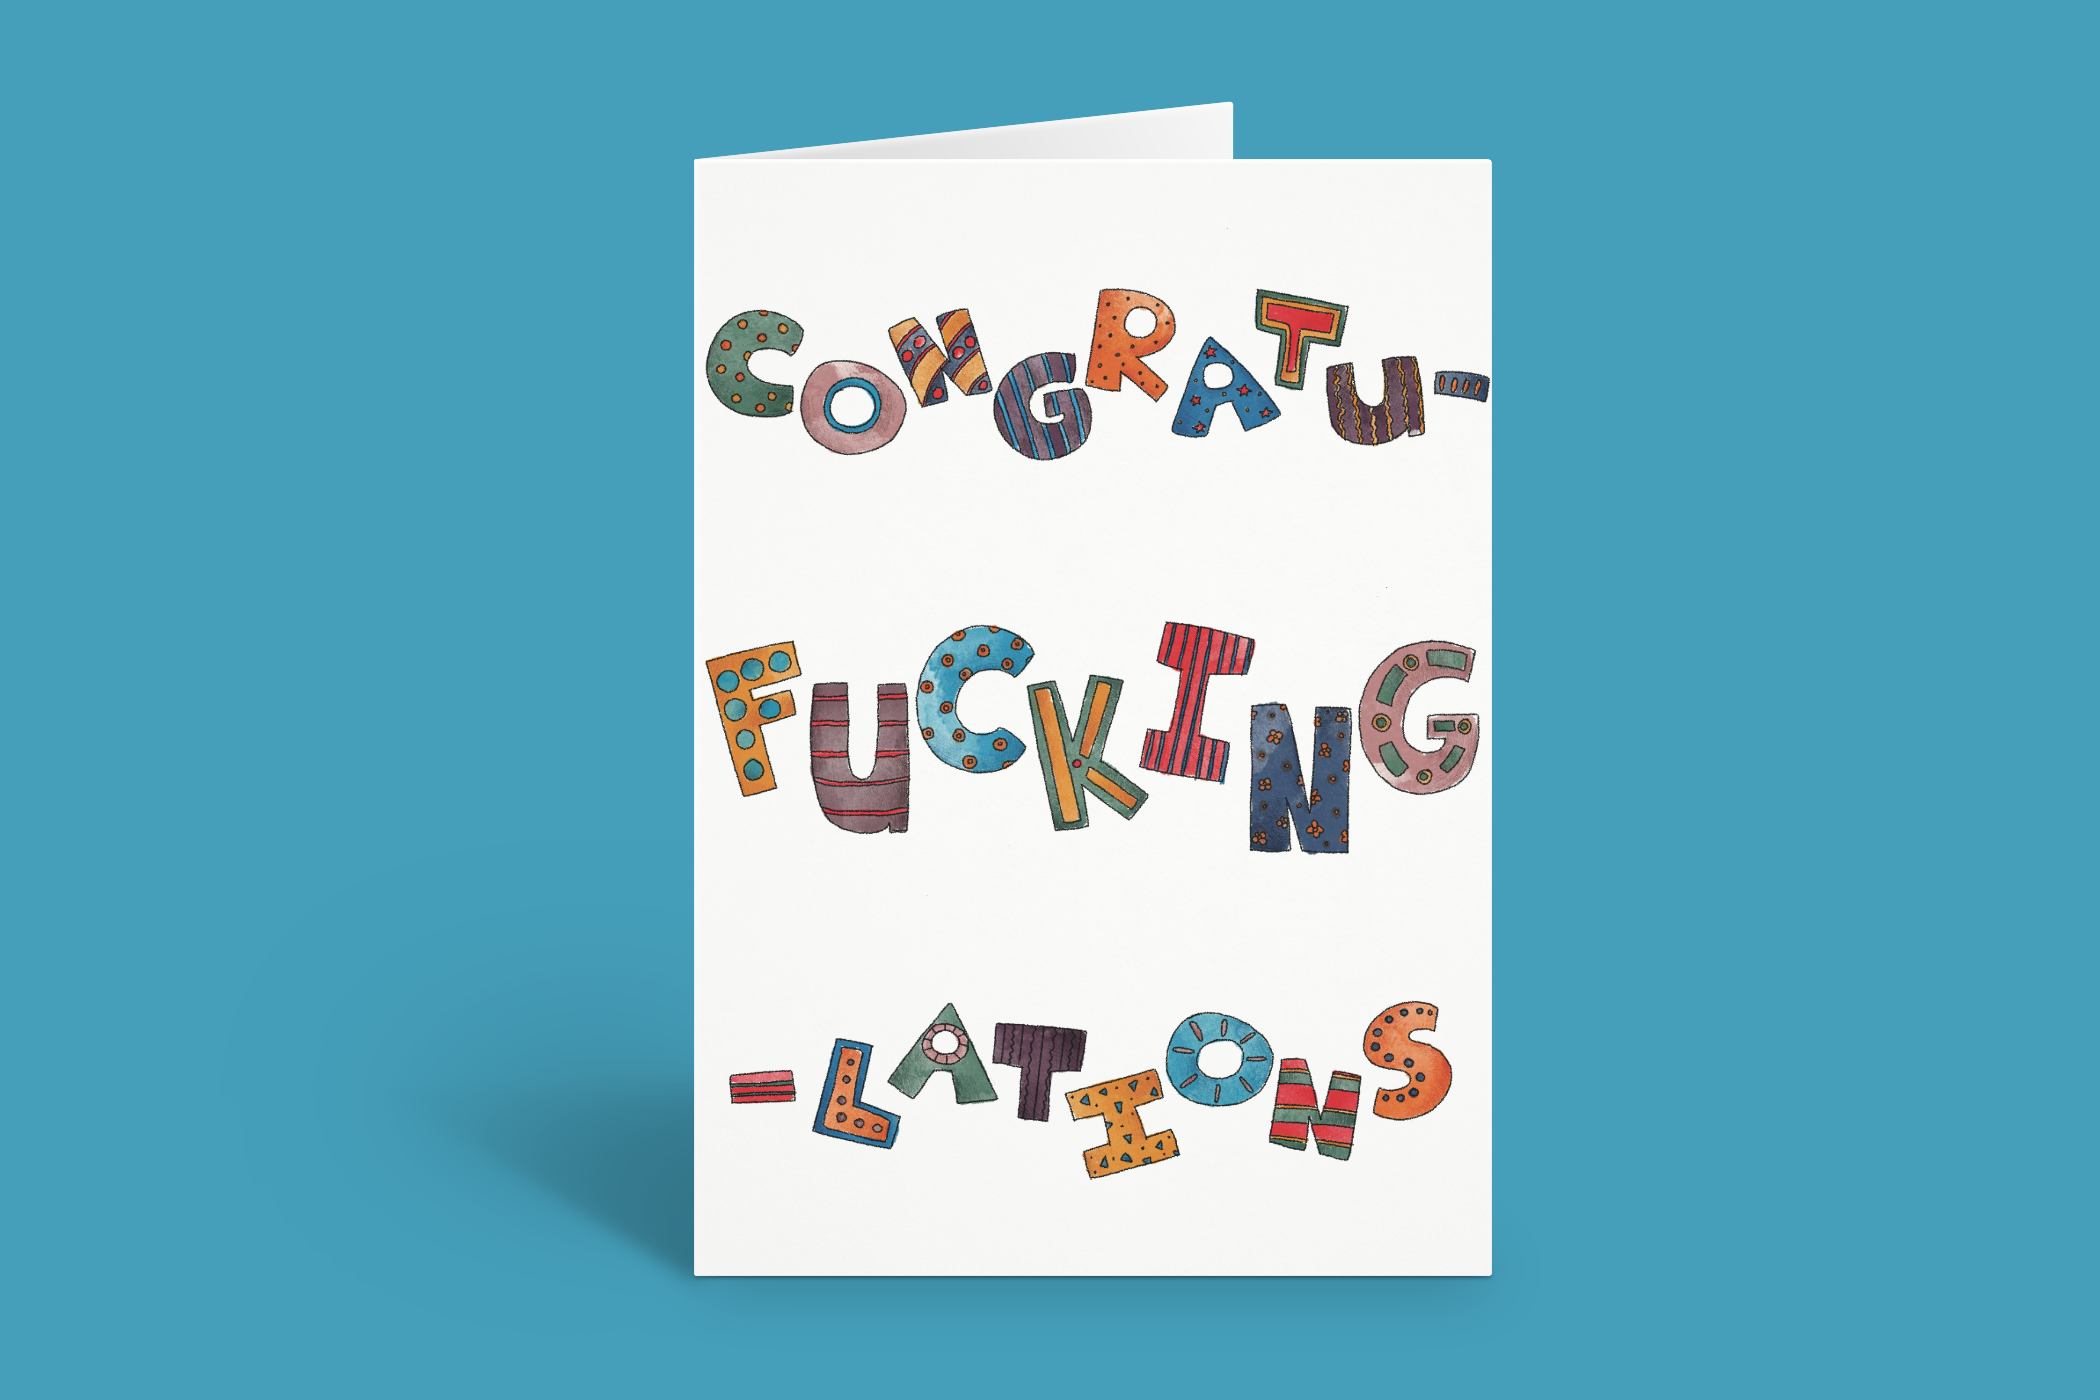 Colorful Congrats Card